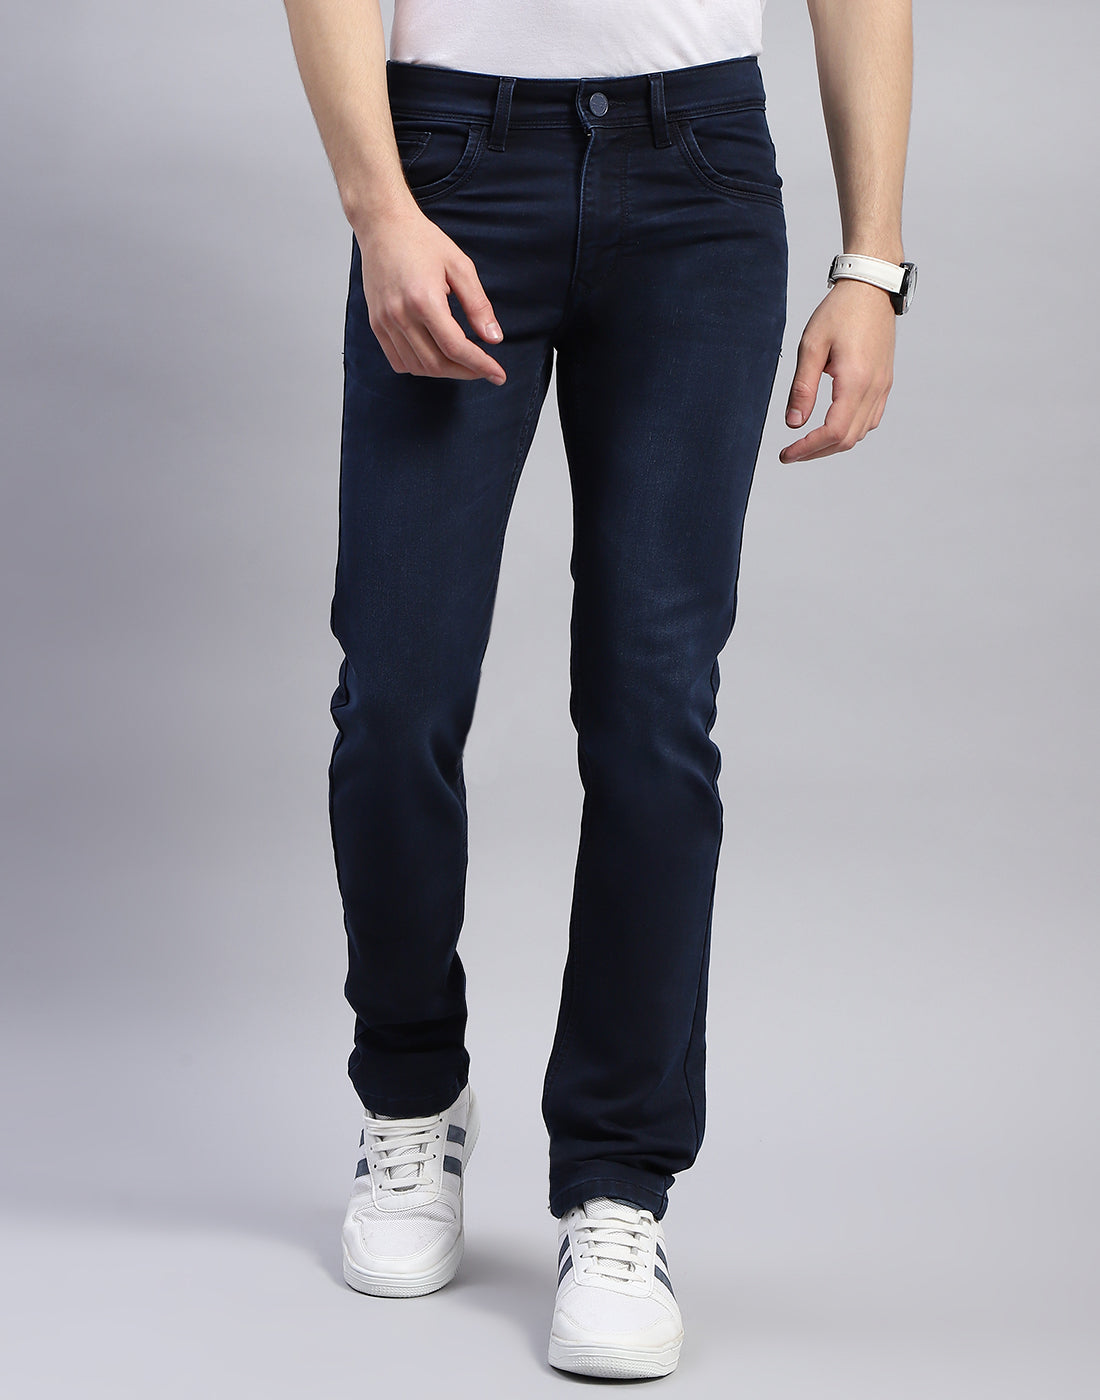 Estrolo | Buy Branded Dark Black Jeans For Men | Stretchable Slim-fit